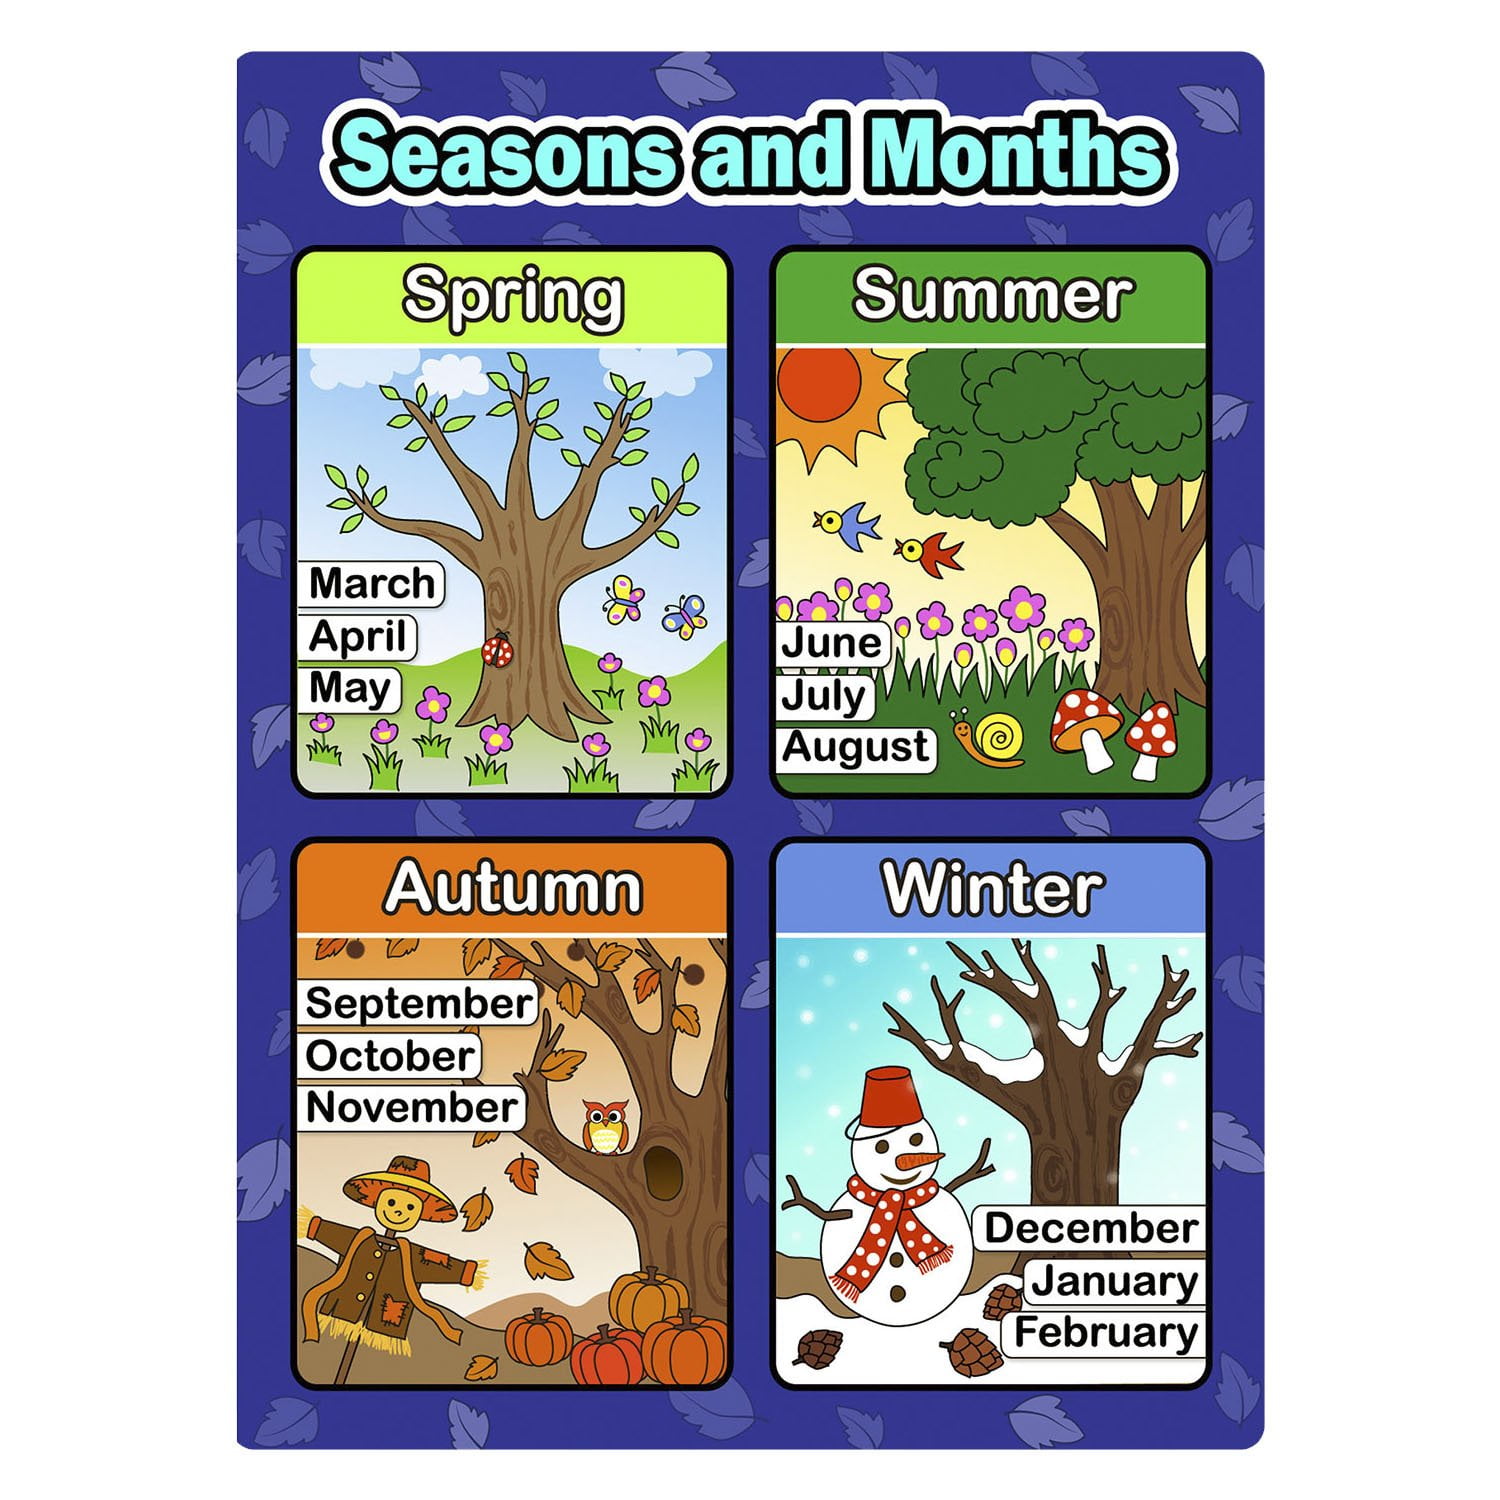 Fall months. Плакат времена года на английском. Seasons and weather плакат. Карточки времена года на английском. Карточки месяца года для детей.